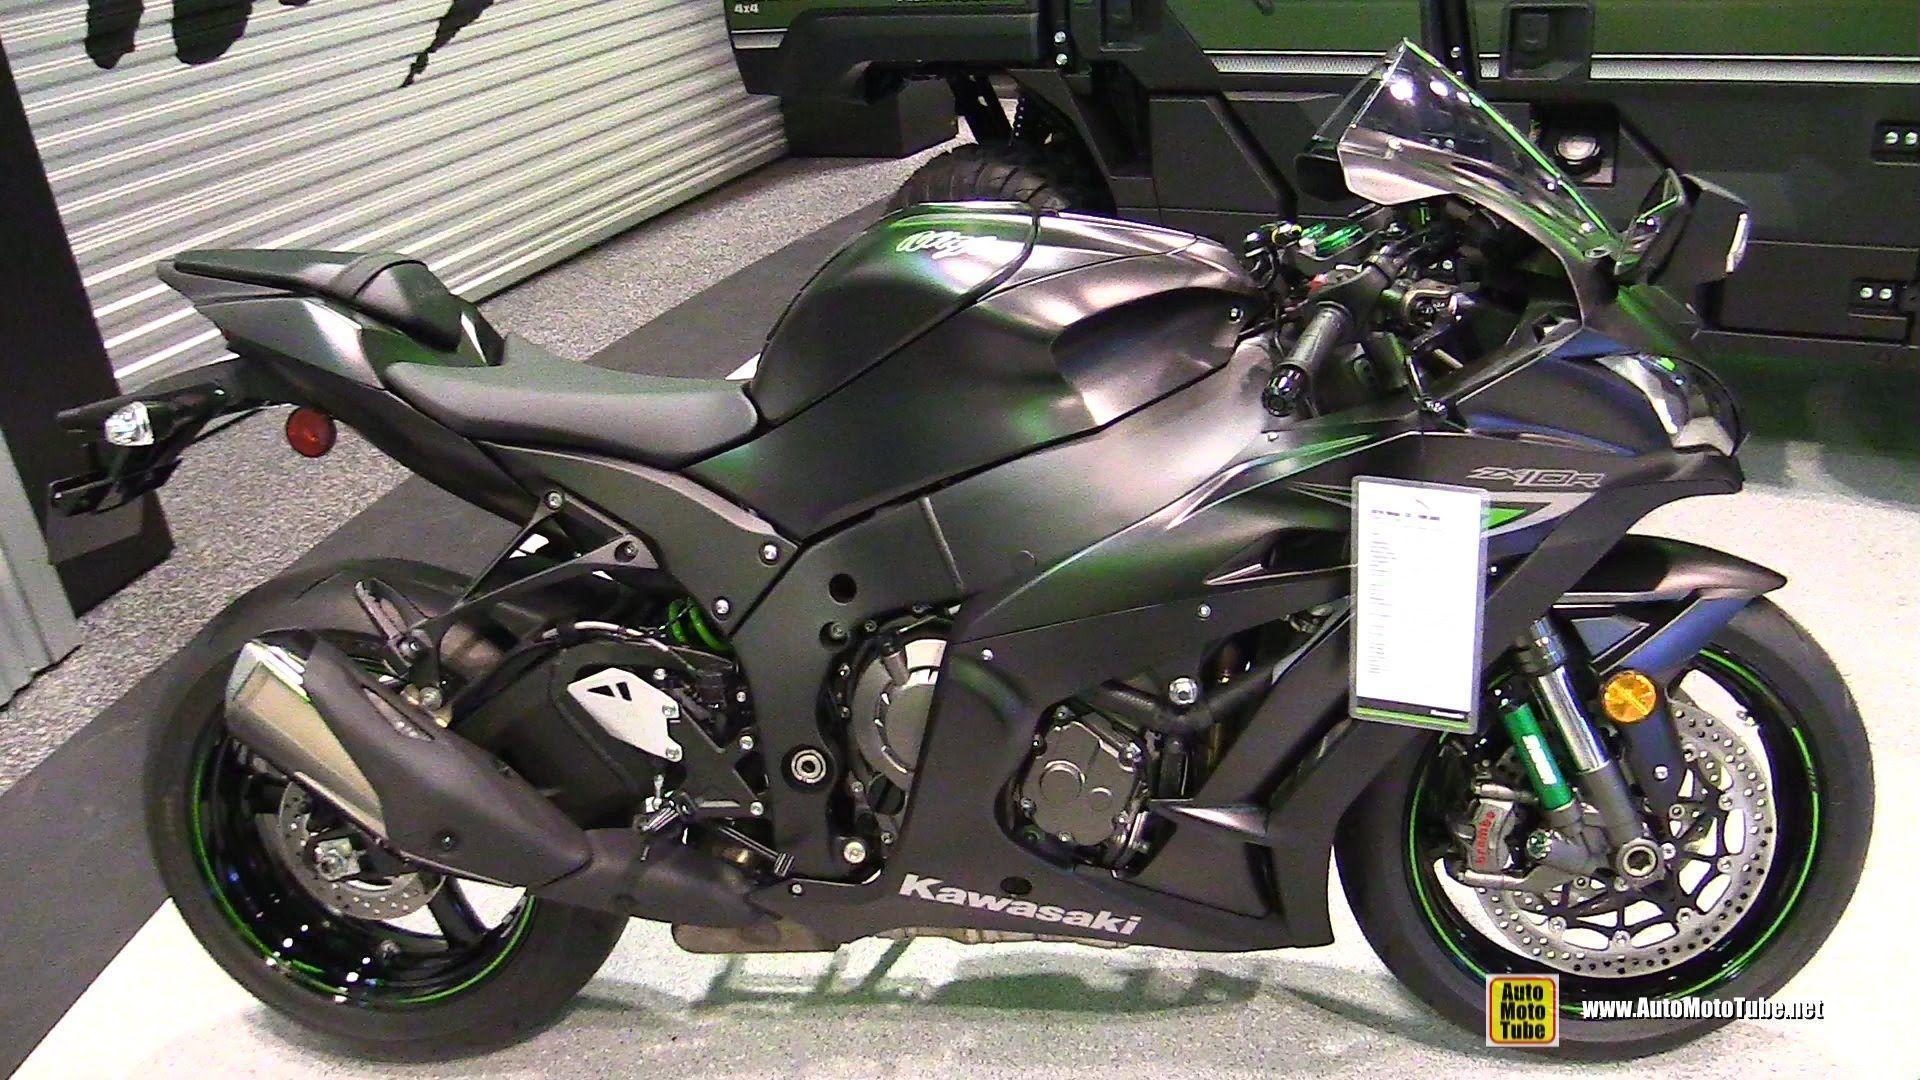 Kawasaki Ninja ZX10R at 2015 AIMExpo